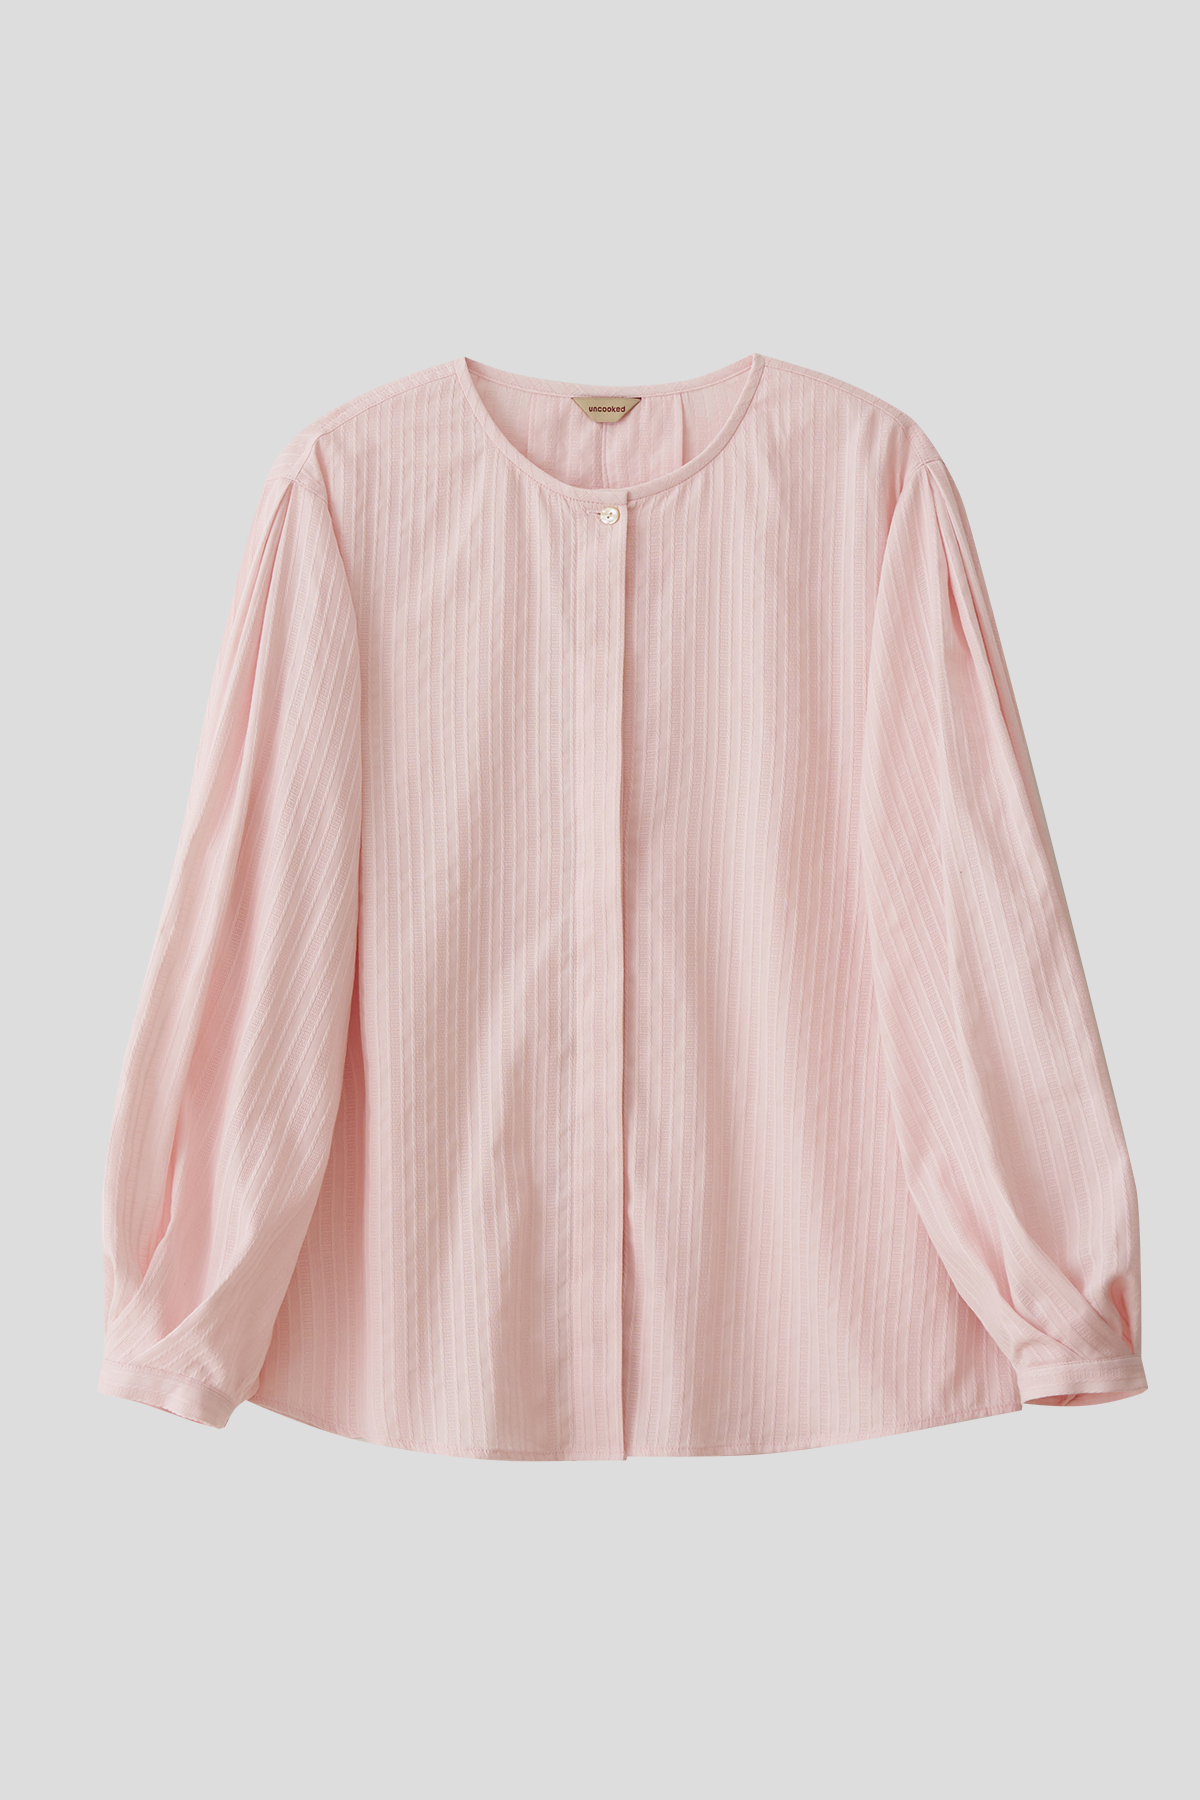 Stripe lace blouse(pink)(3rd)